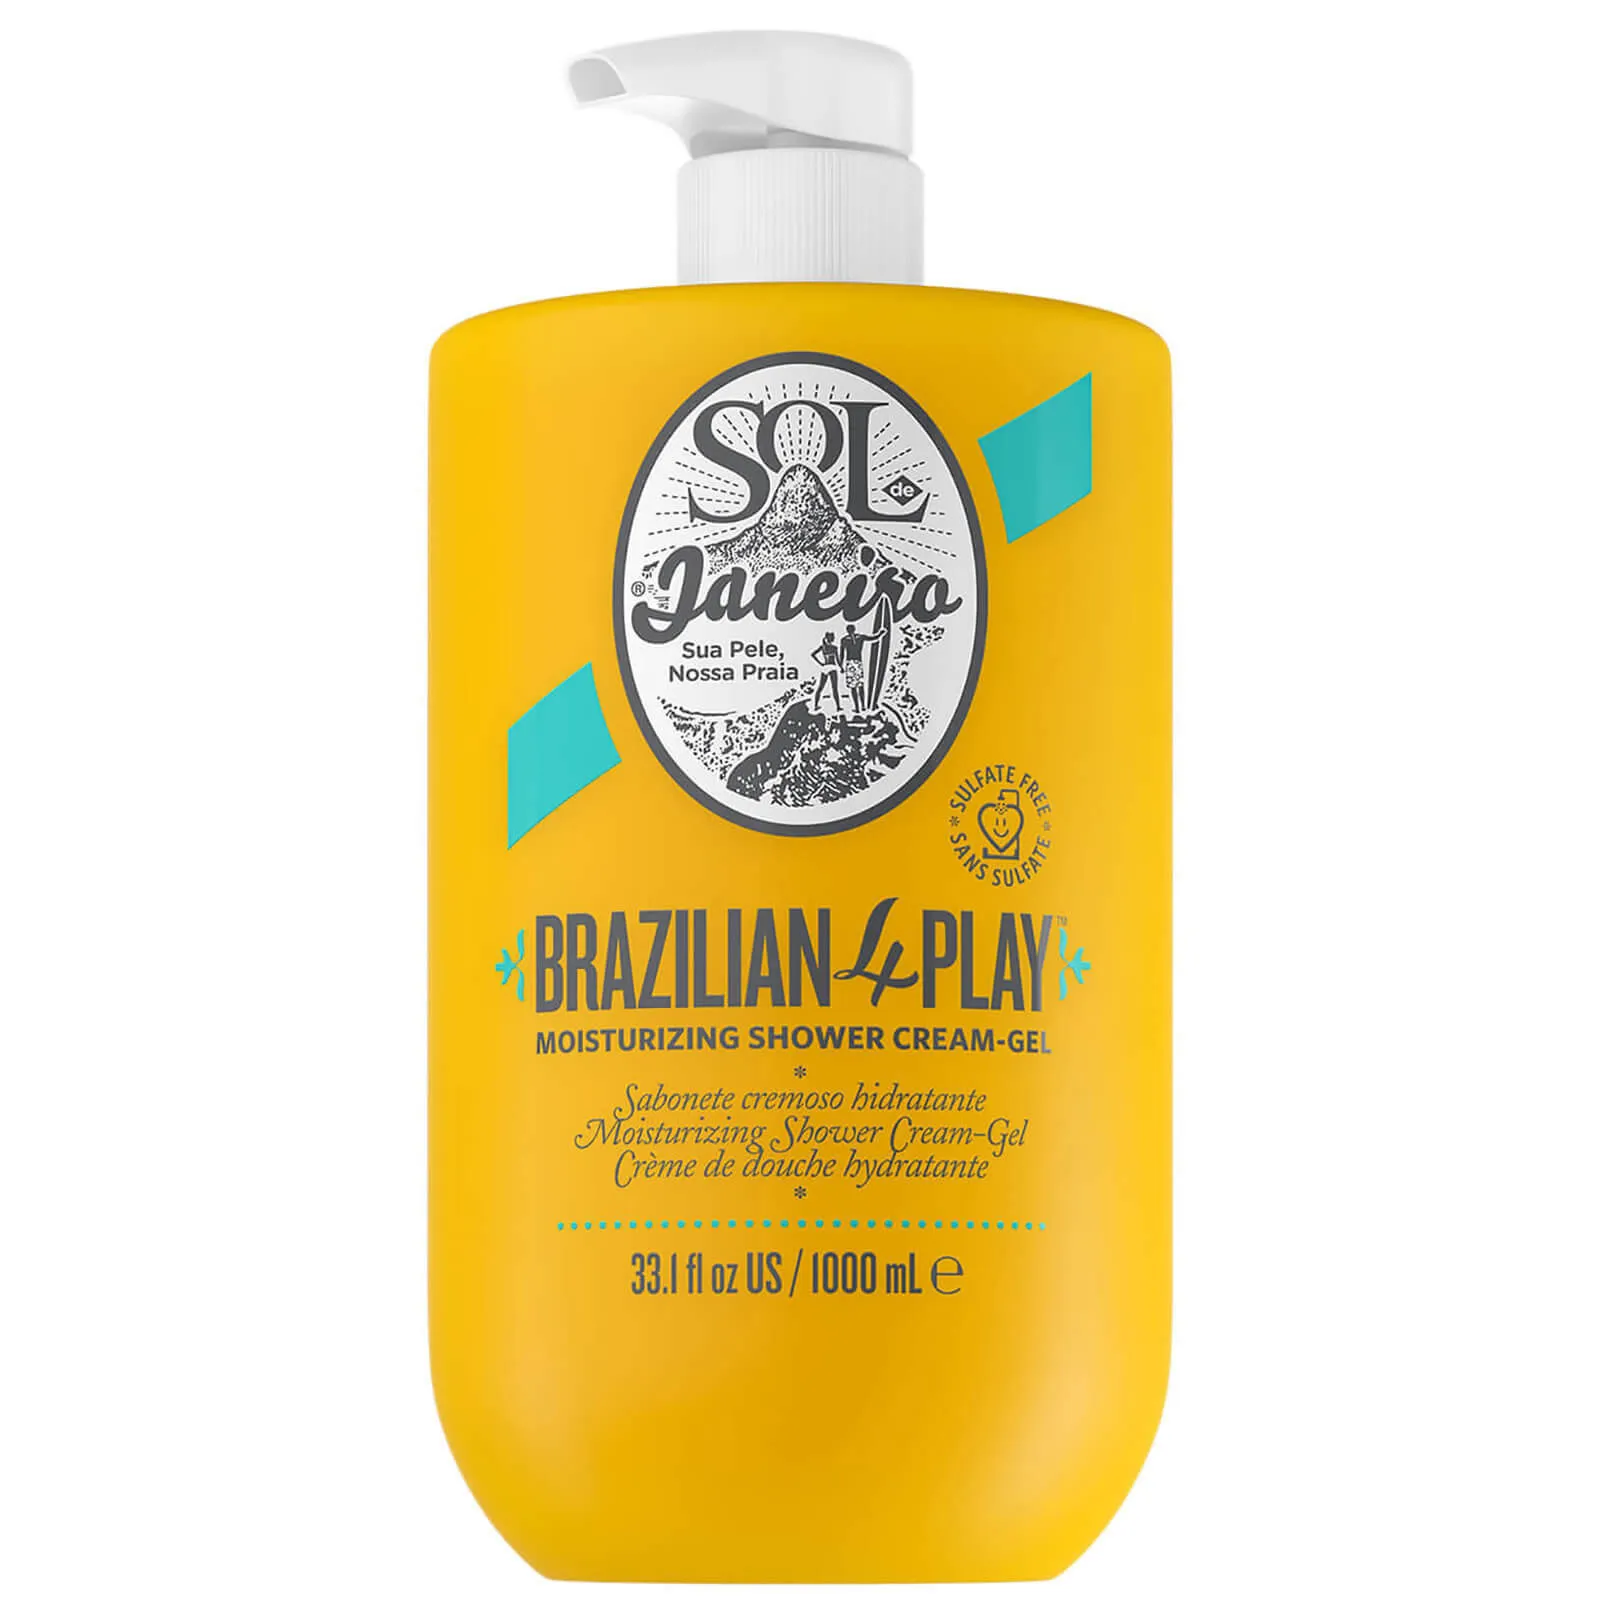  Brazilian 4 Play Moisturizing Shower Cream-Gel 1000ml